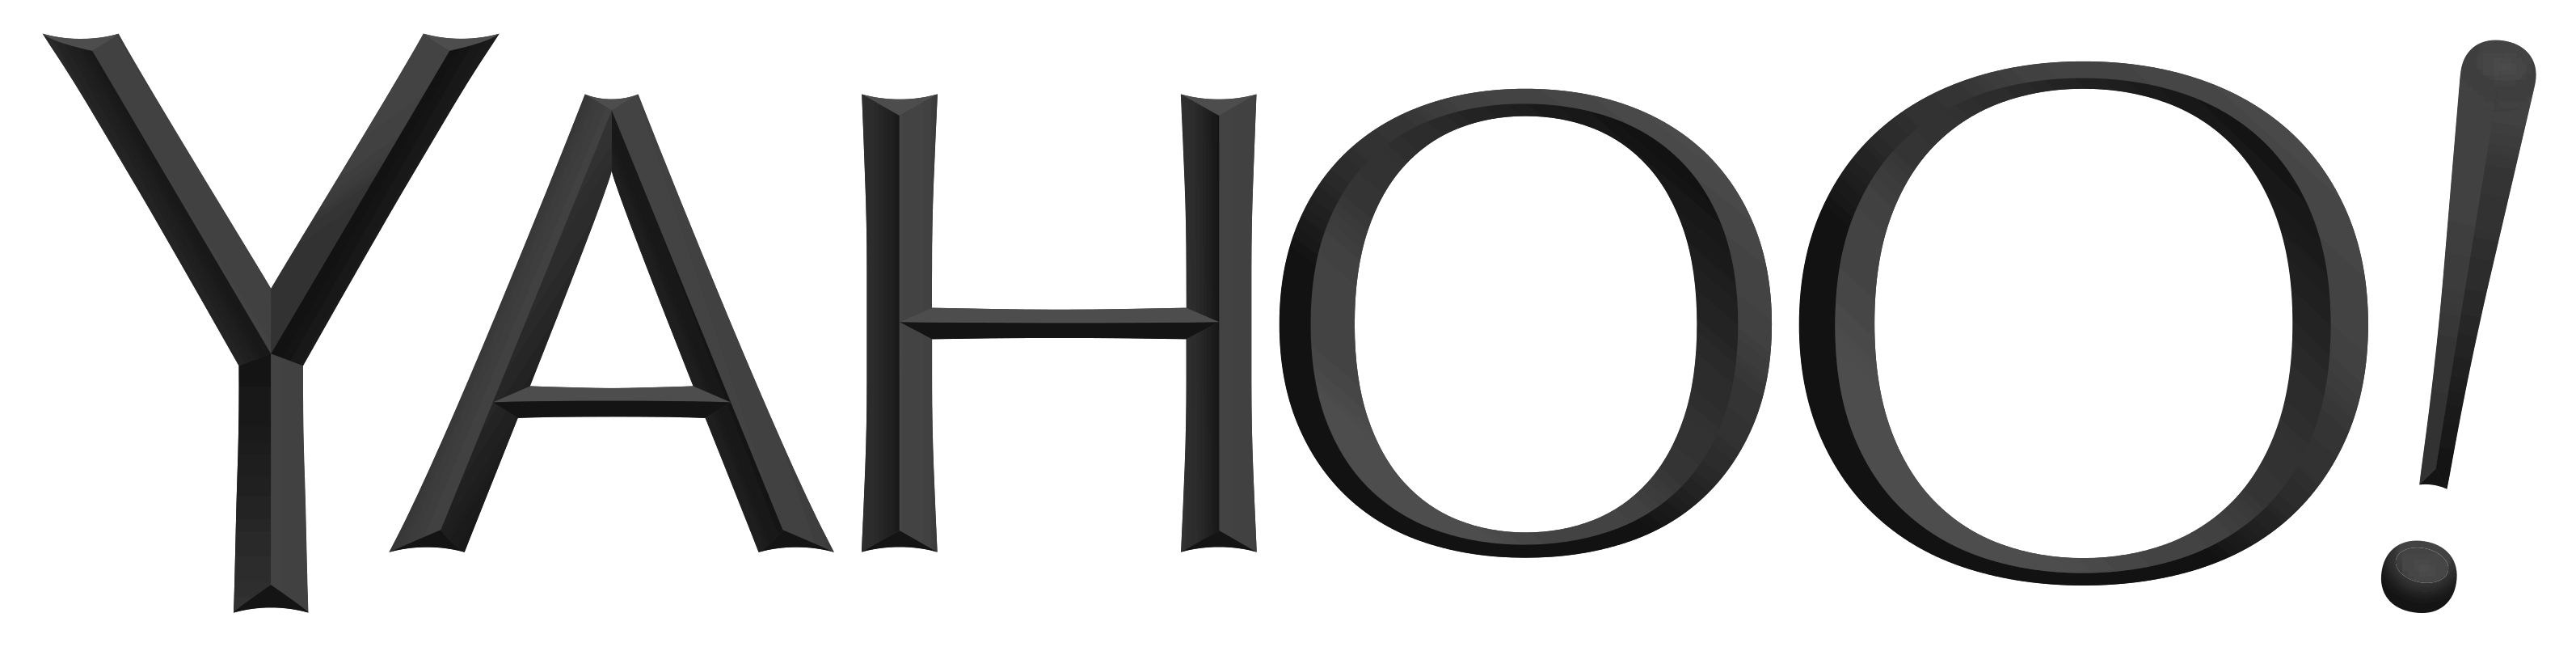 Image result for yahoo logo black and white"